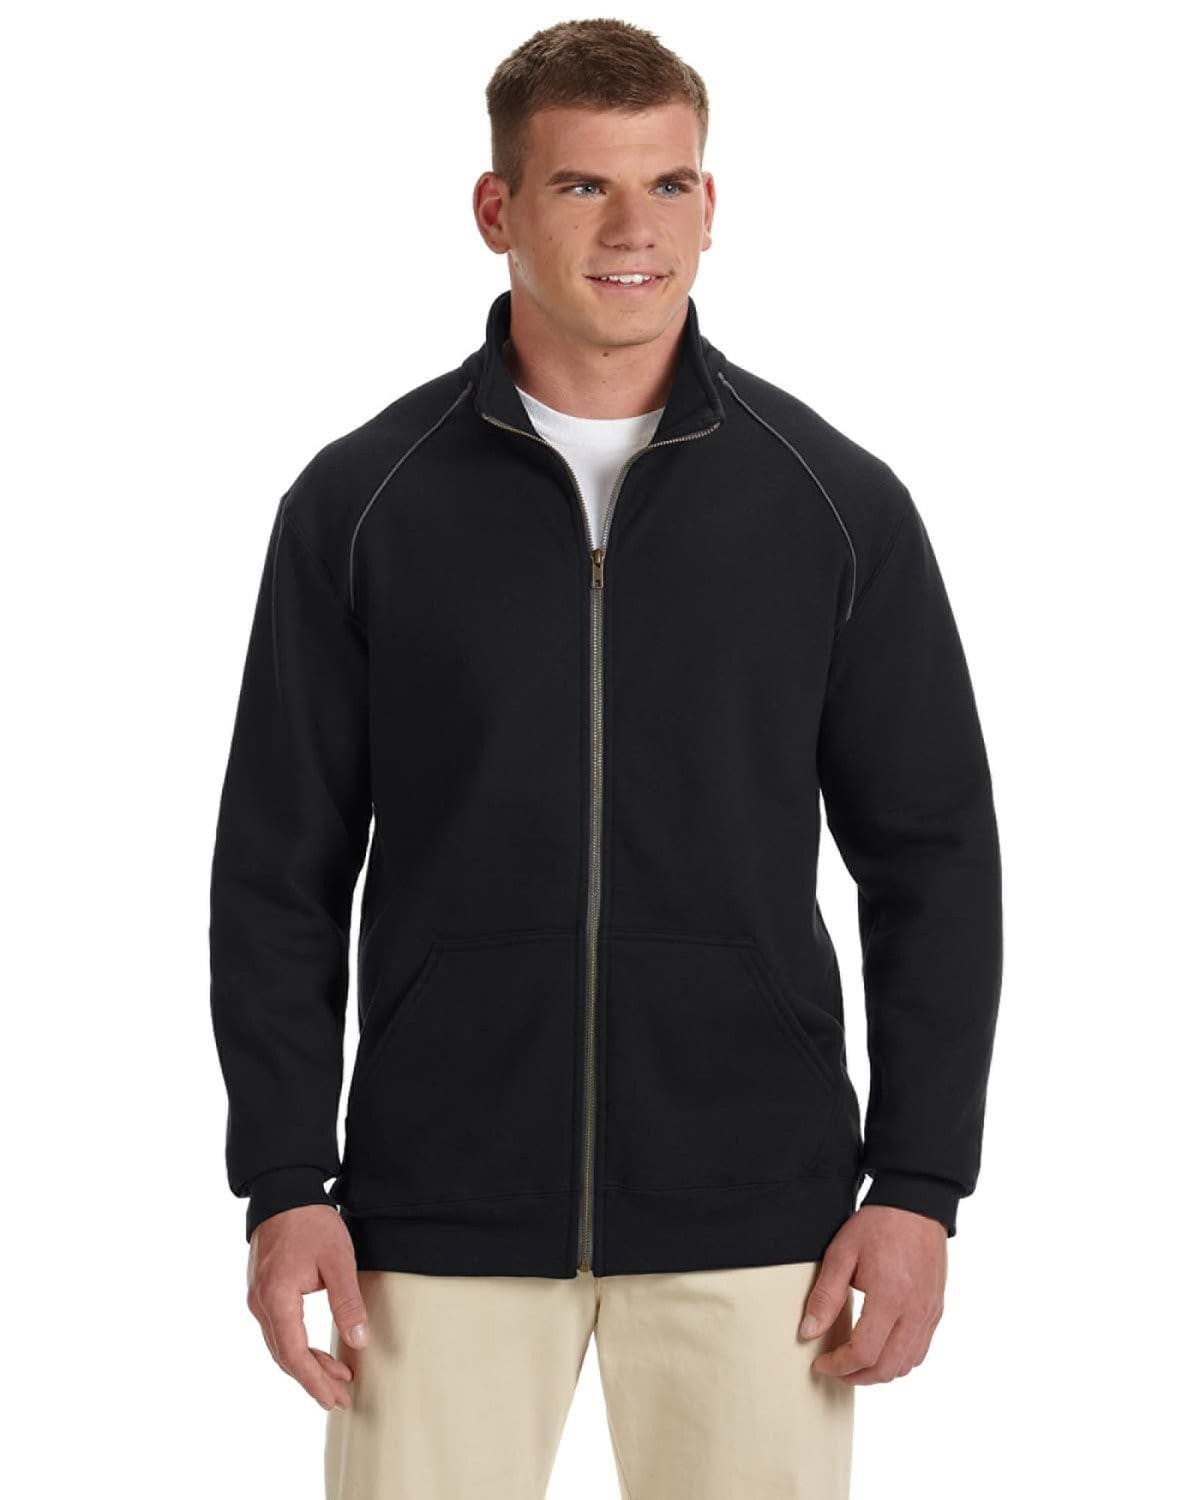 g929-adult-premium-cotton-adult-9-oz-fleece-full-zip-jacket-Small-BLACK-Oasispromos